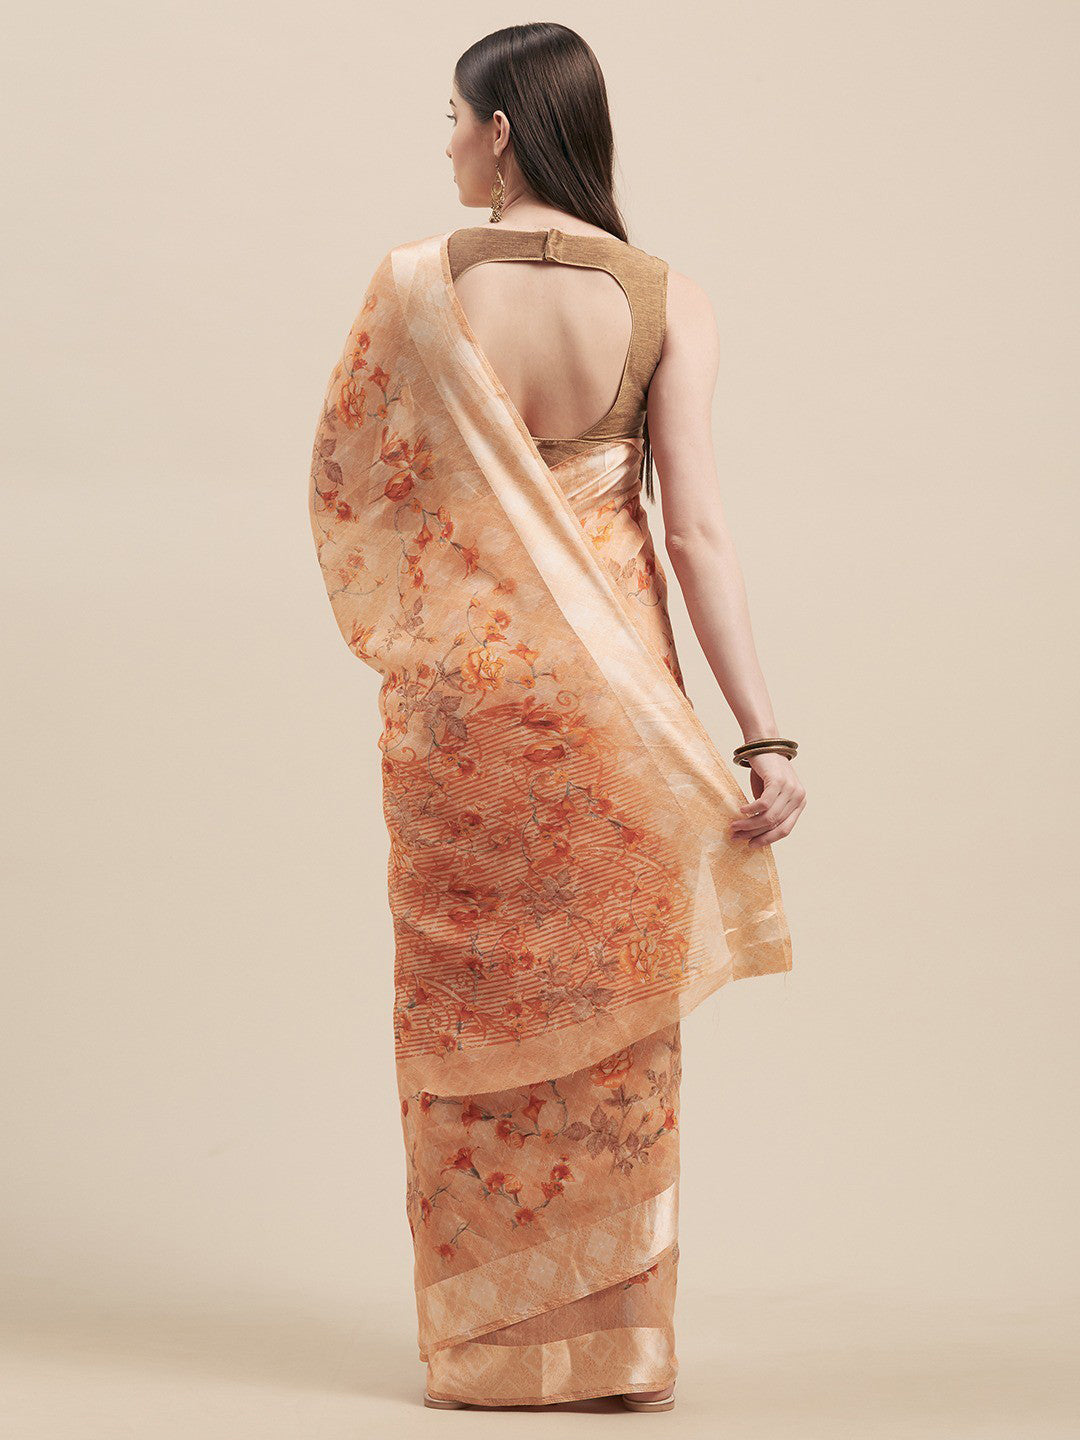 Women's Orange Cotton Blend Printed Saree - Ahika